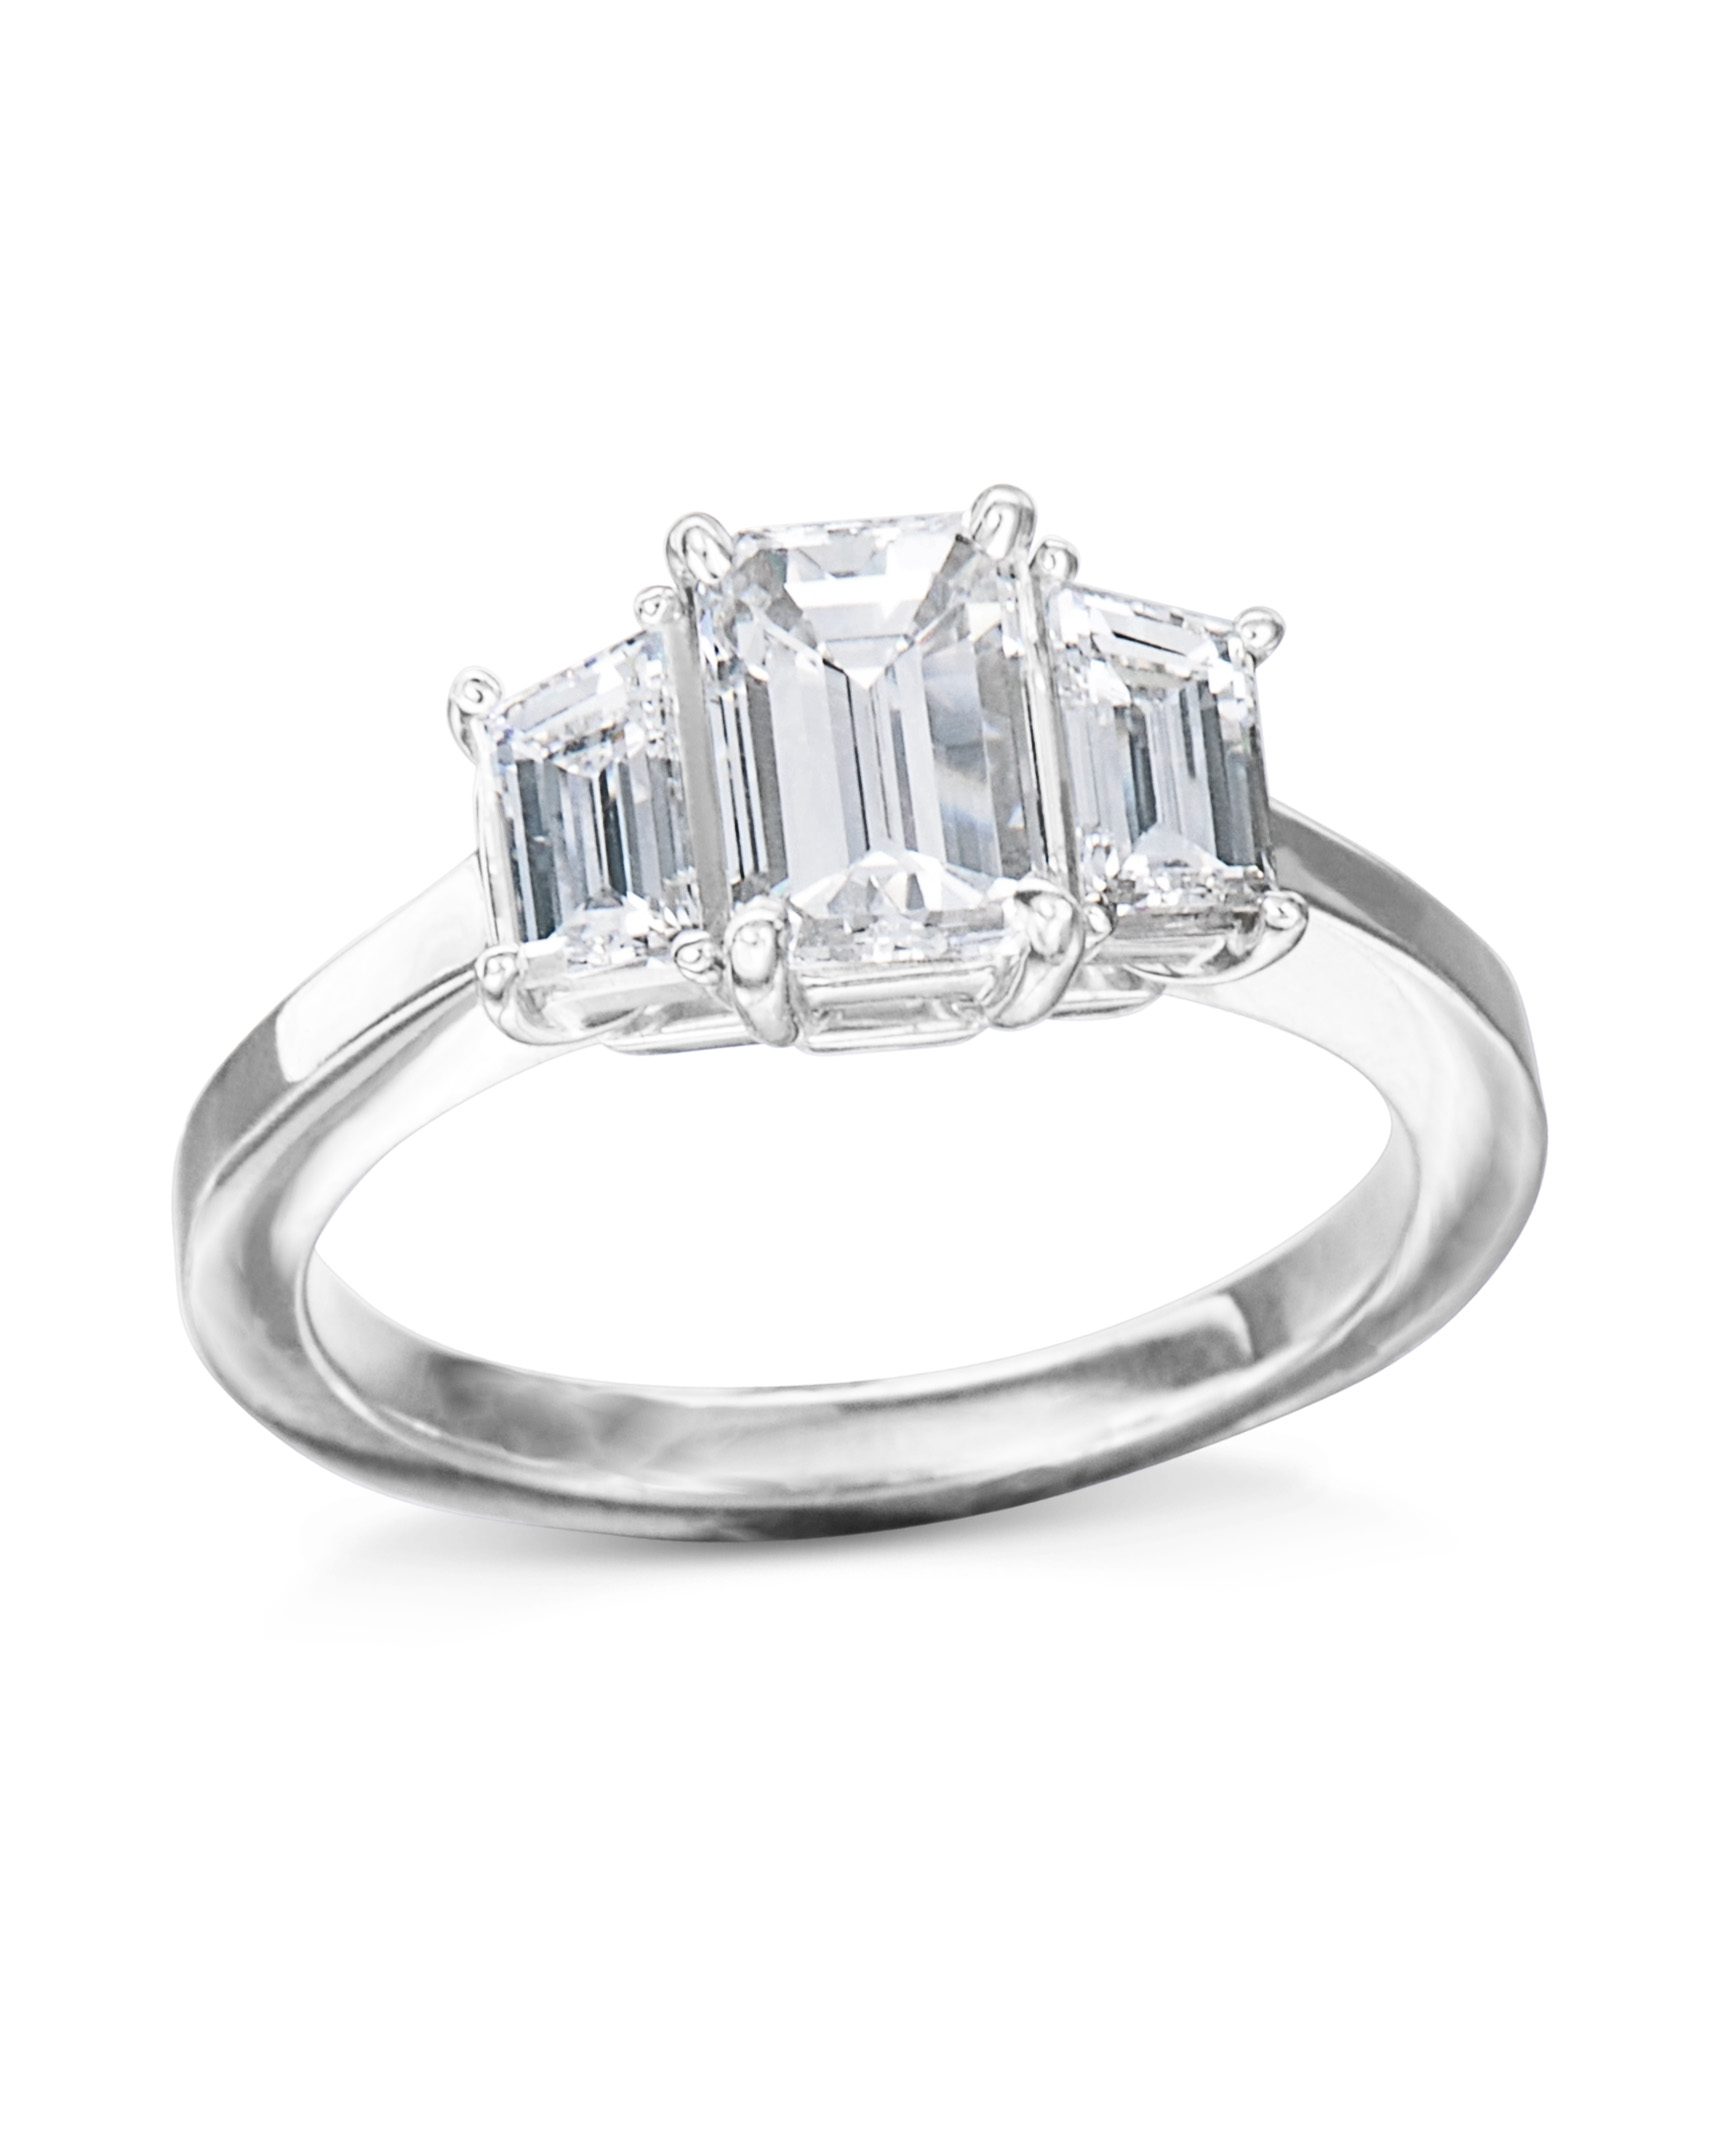 Emerald Cut Three Stone Diamond Ring - Custom Jewelry Design